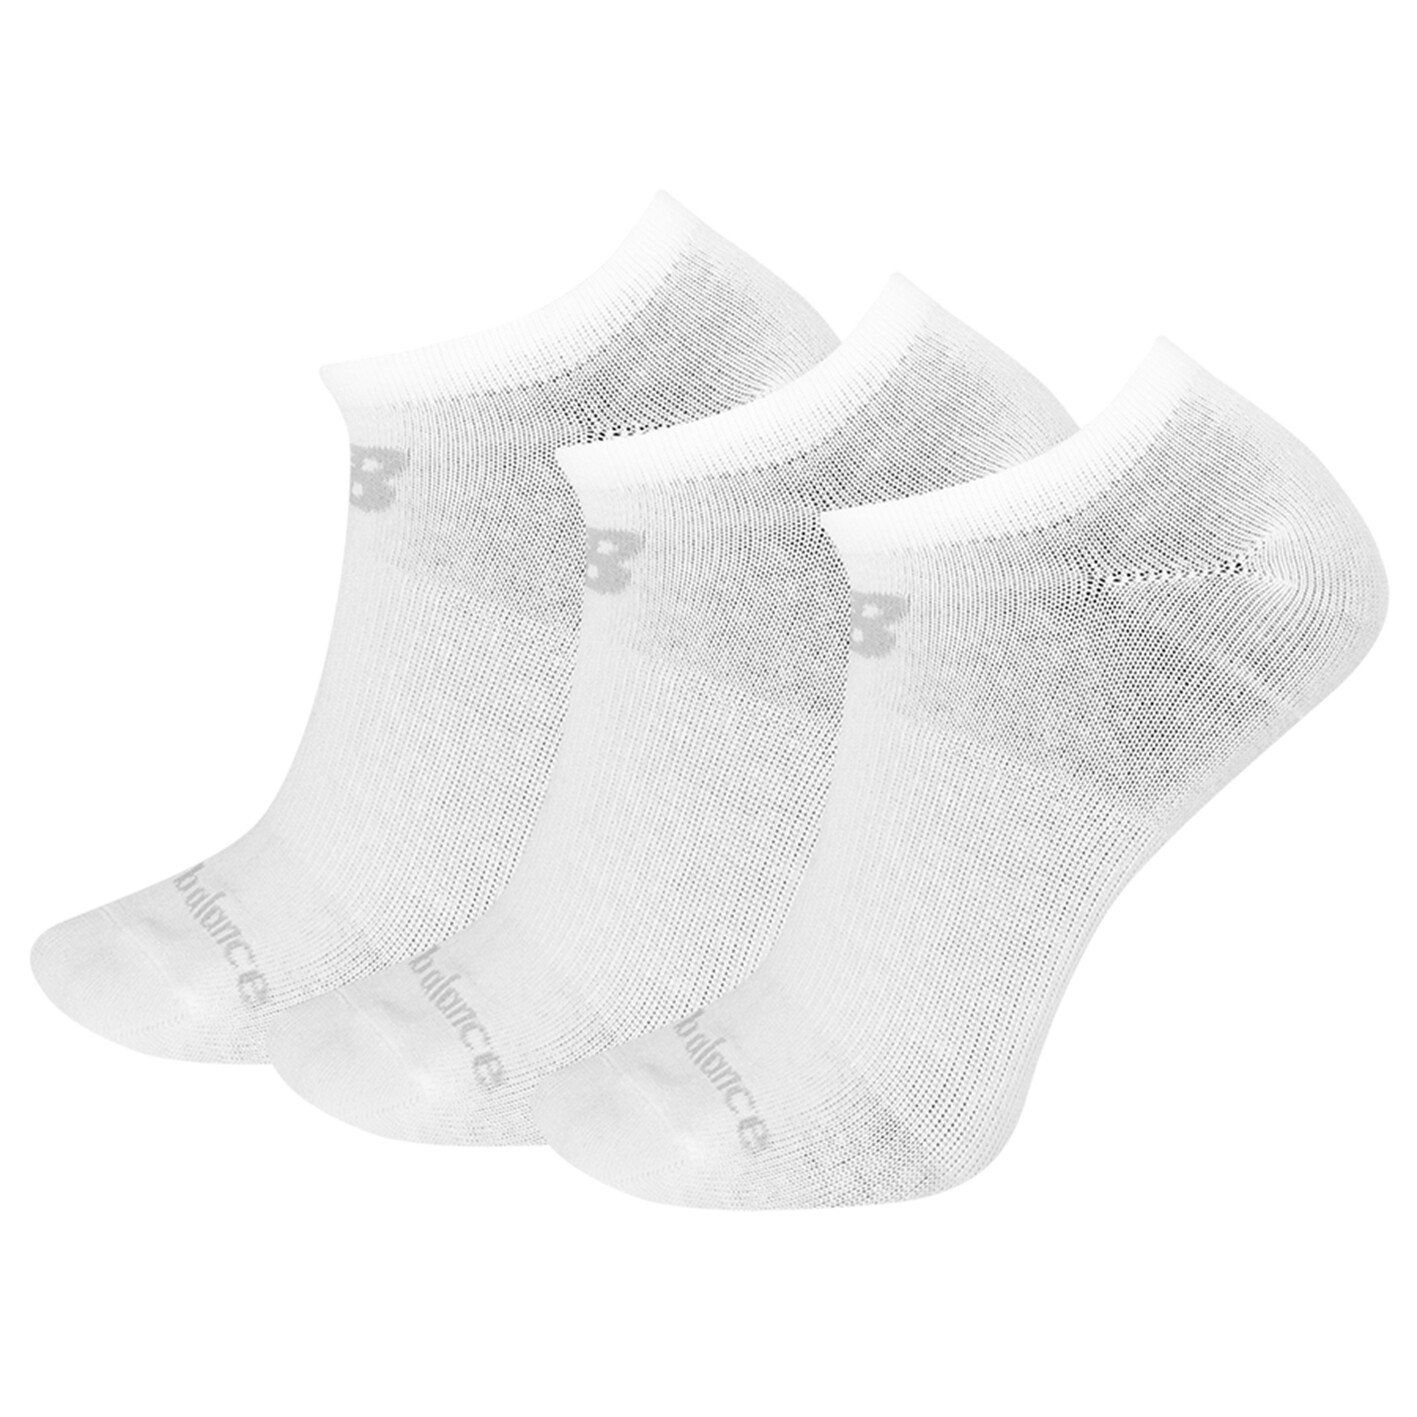 New Balance - NB PF Cotton Flat Knit No Show Socks 3 Pair